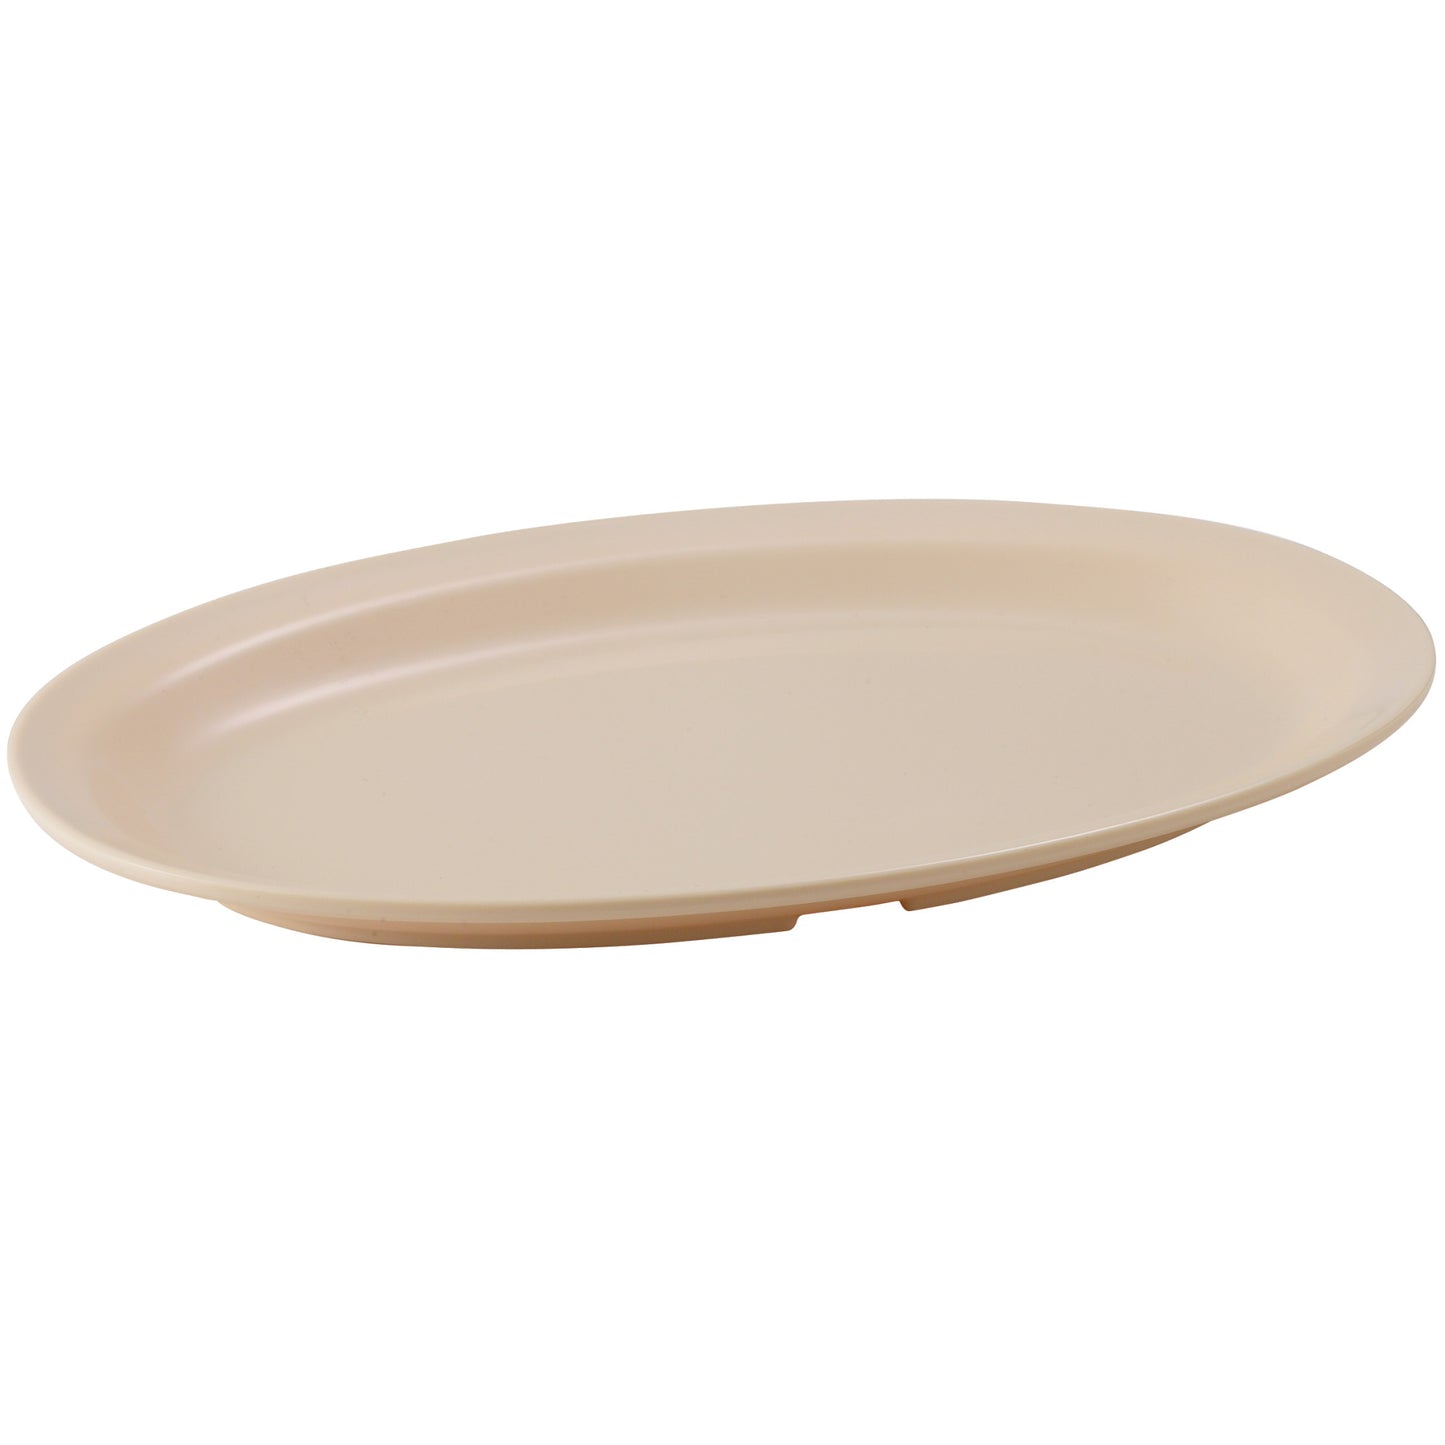 MMPO-118 - Melamine 11-1/2" x 8" Oval Platter - Tan